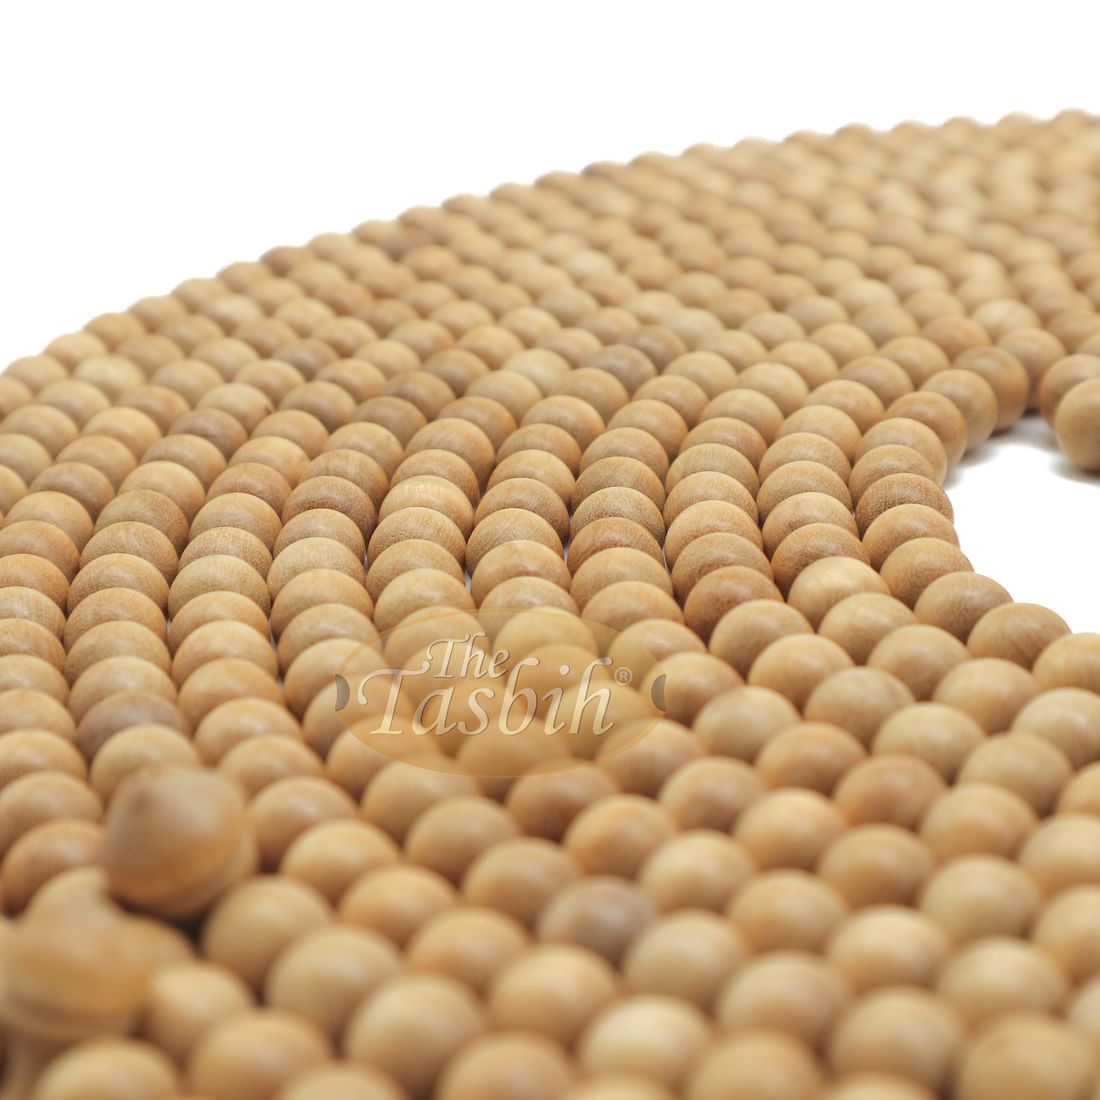 1000-Bead Exotic Yellow Citrus Wood (kemuning) Tasbih – 8mm Prayer Beads – Subha Misbaha with Beautiful Tassels